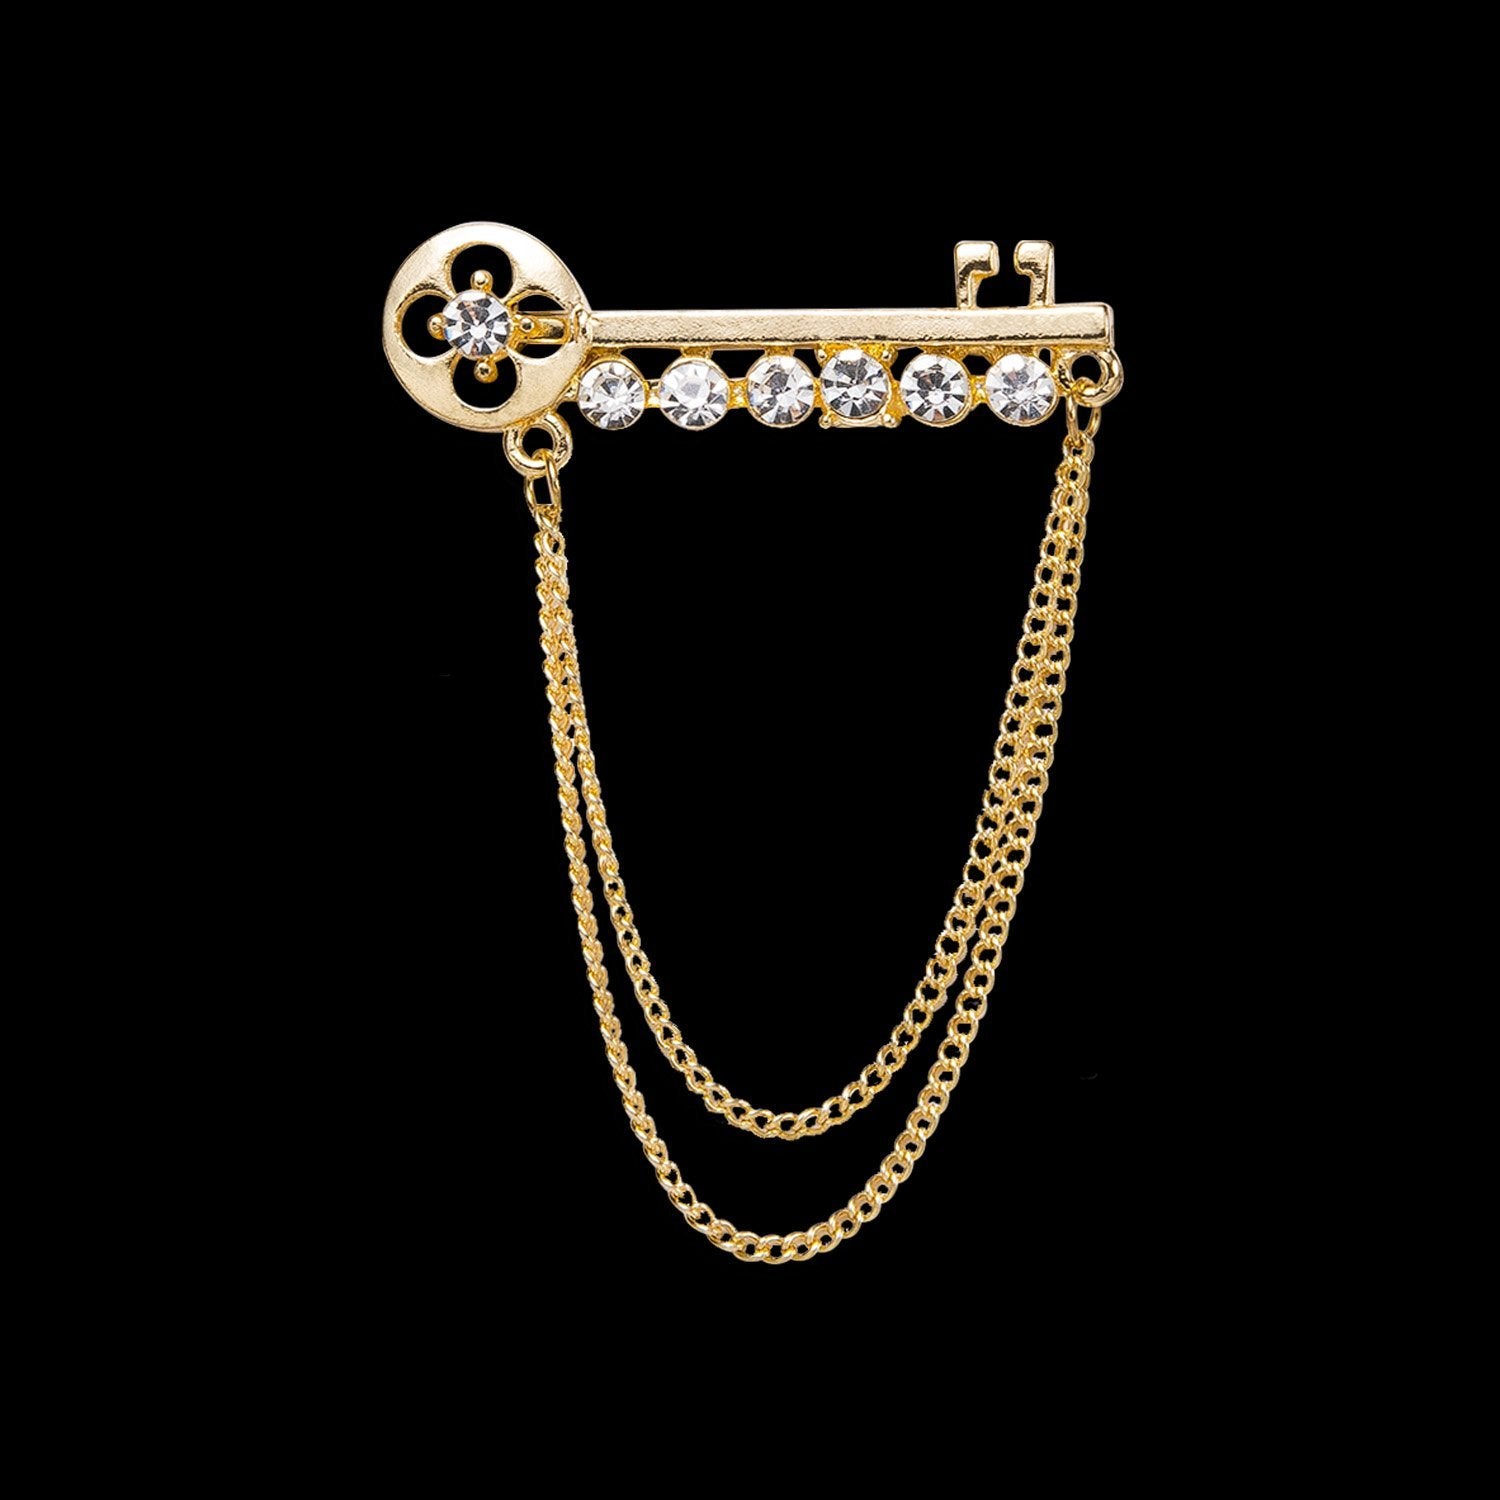 Gold Stripe Black Necktie Alloy Lapel Pin Brooch Pocket Square Cufflinks Gift Box Set